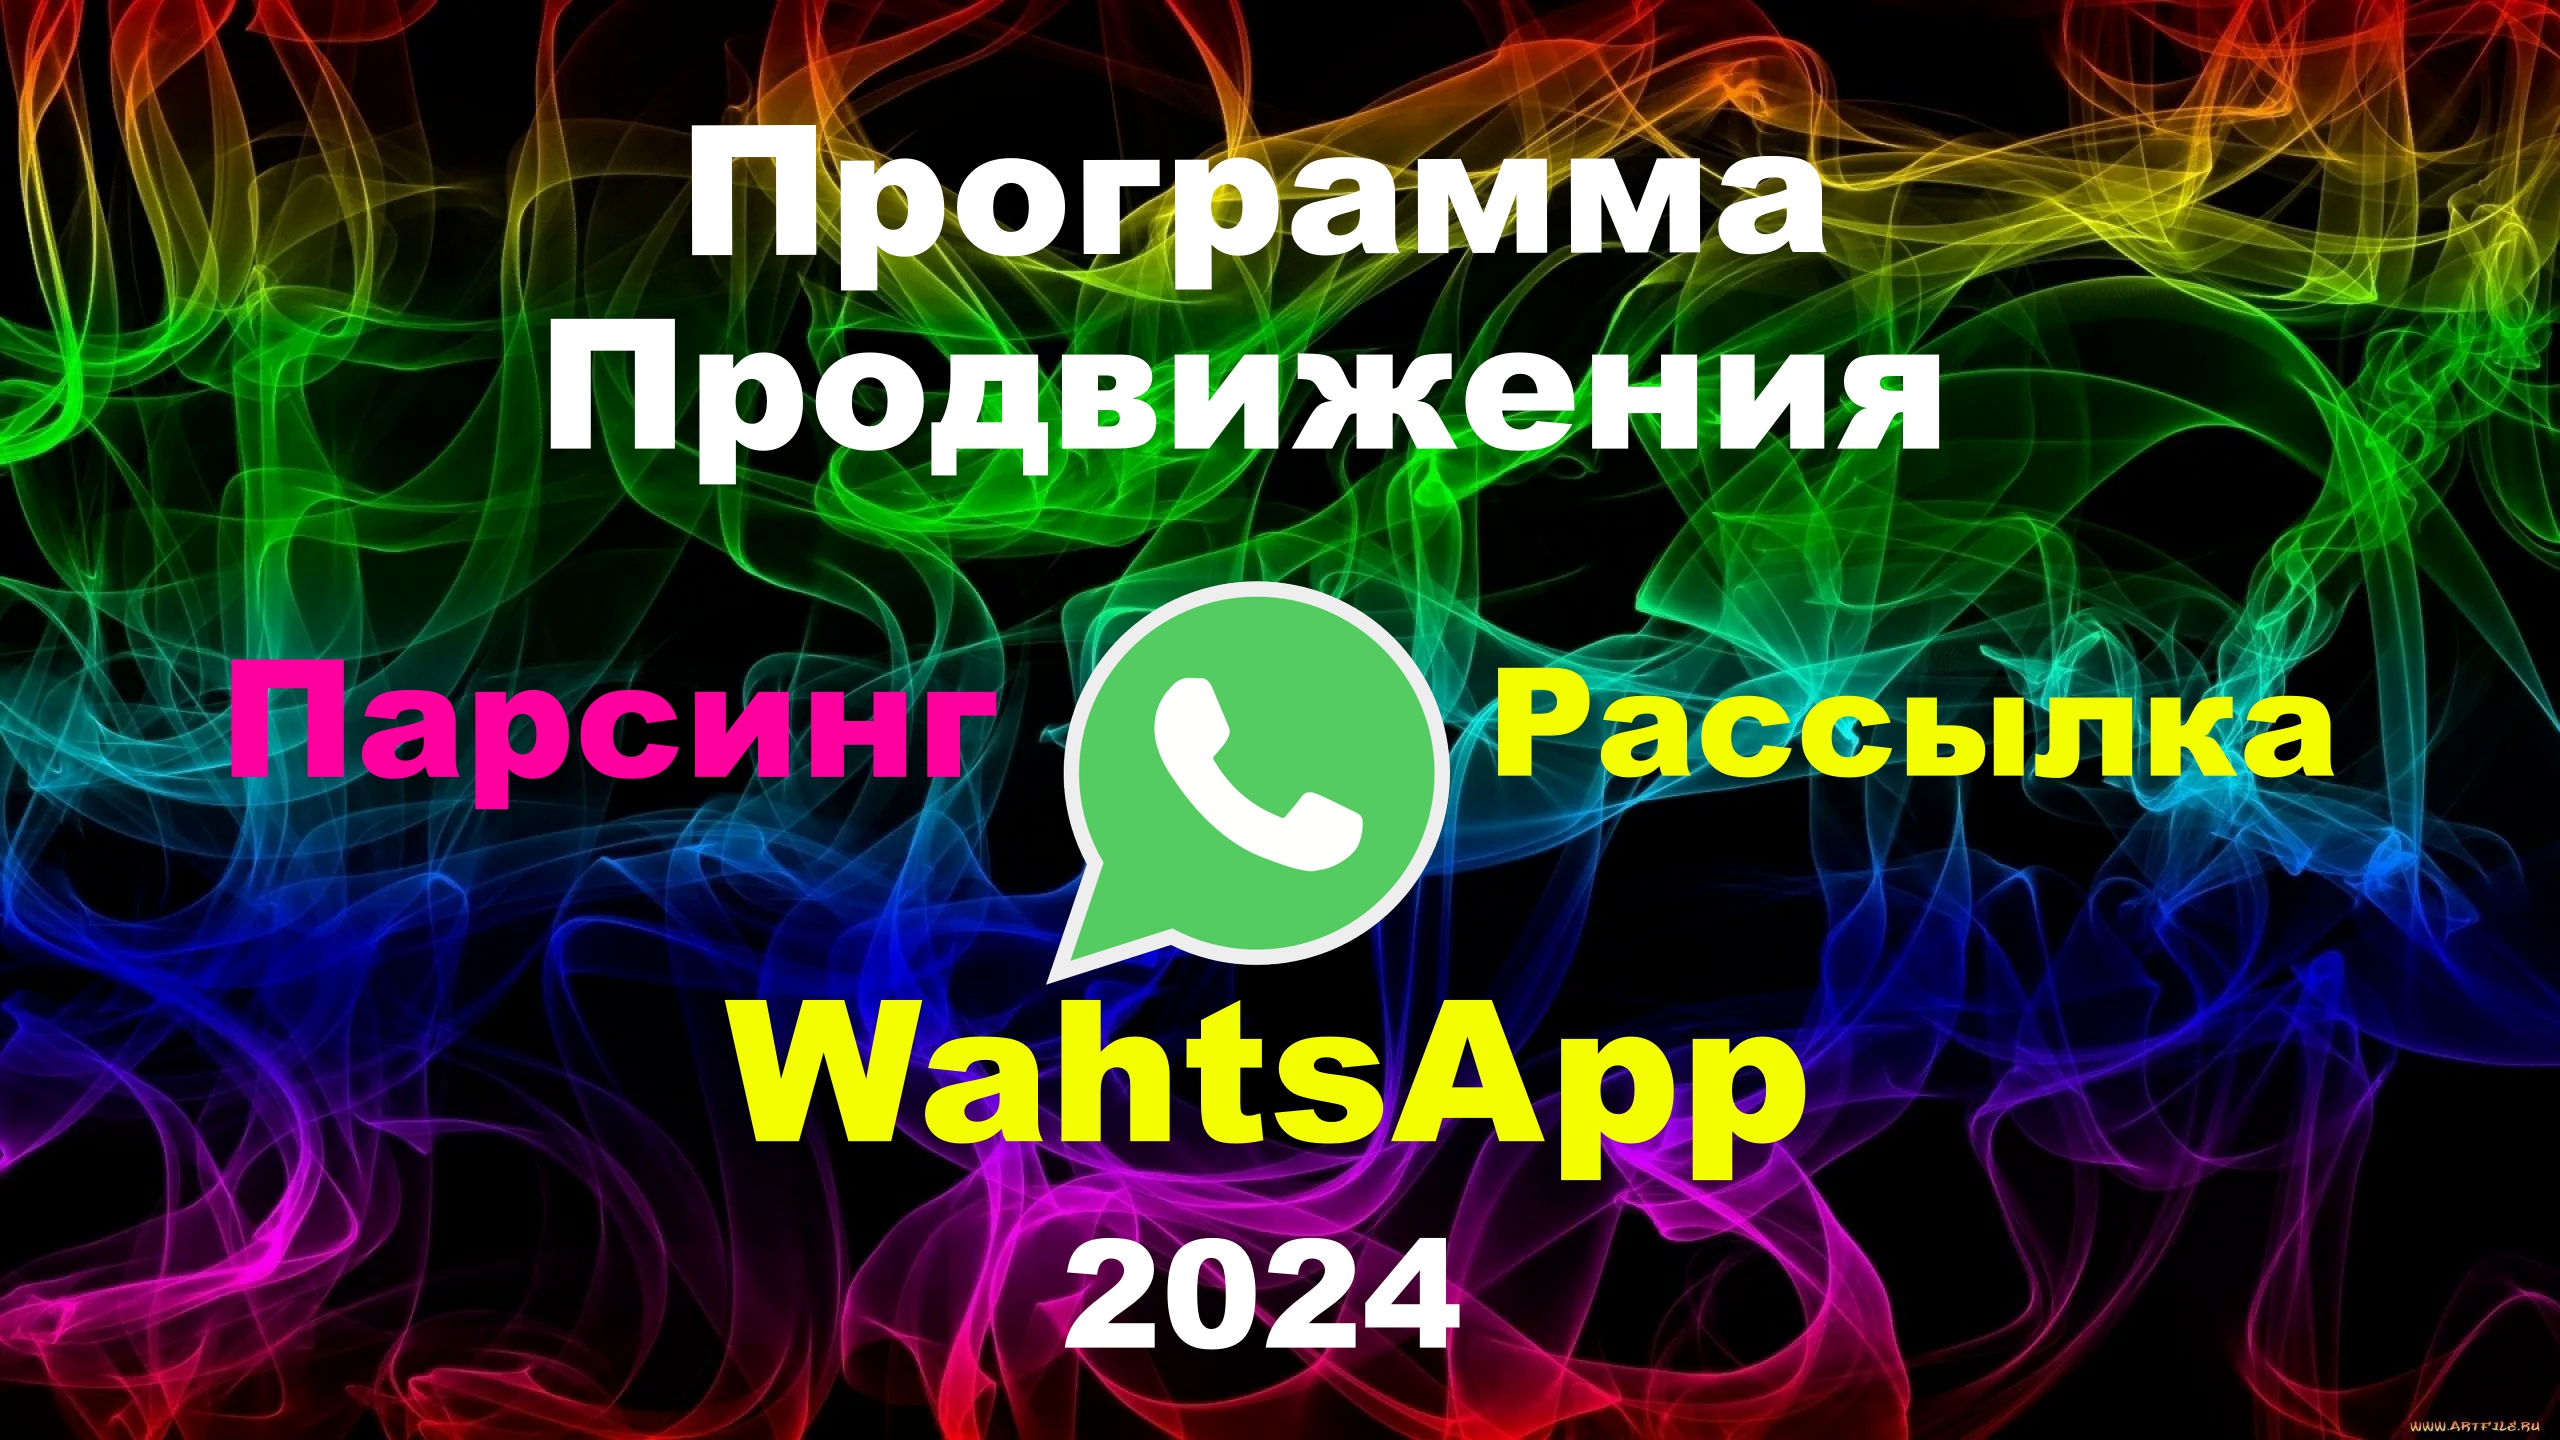 SavSoft_WhatsApp   описание и функционал программы продвижения.